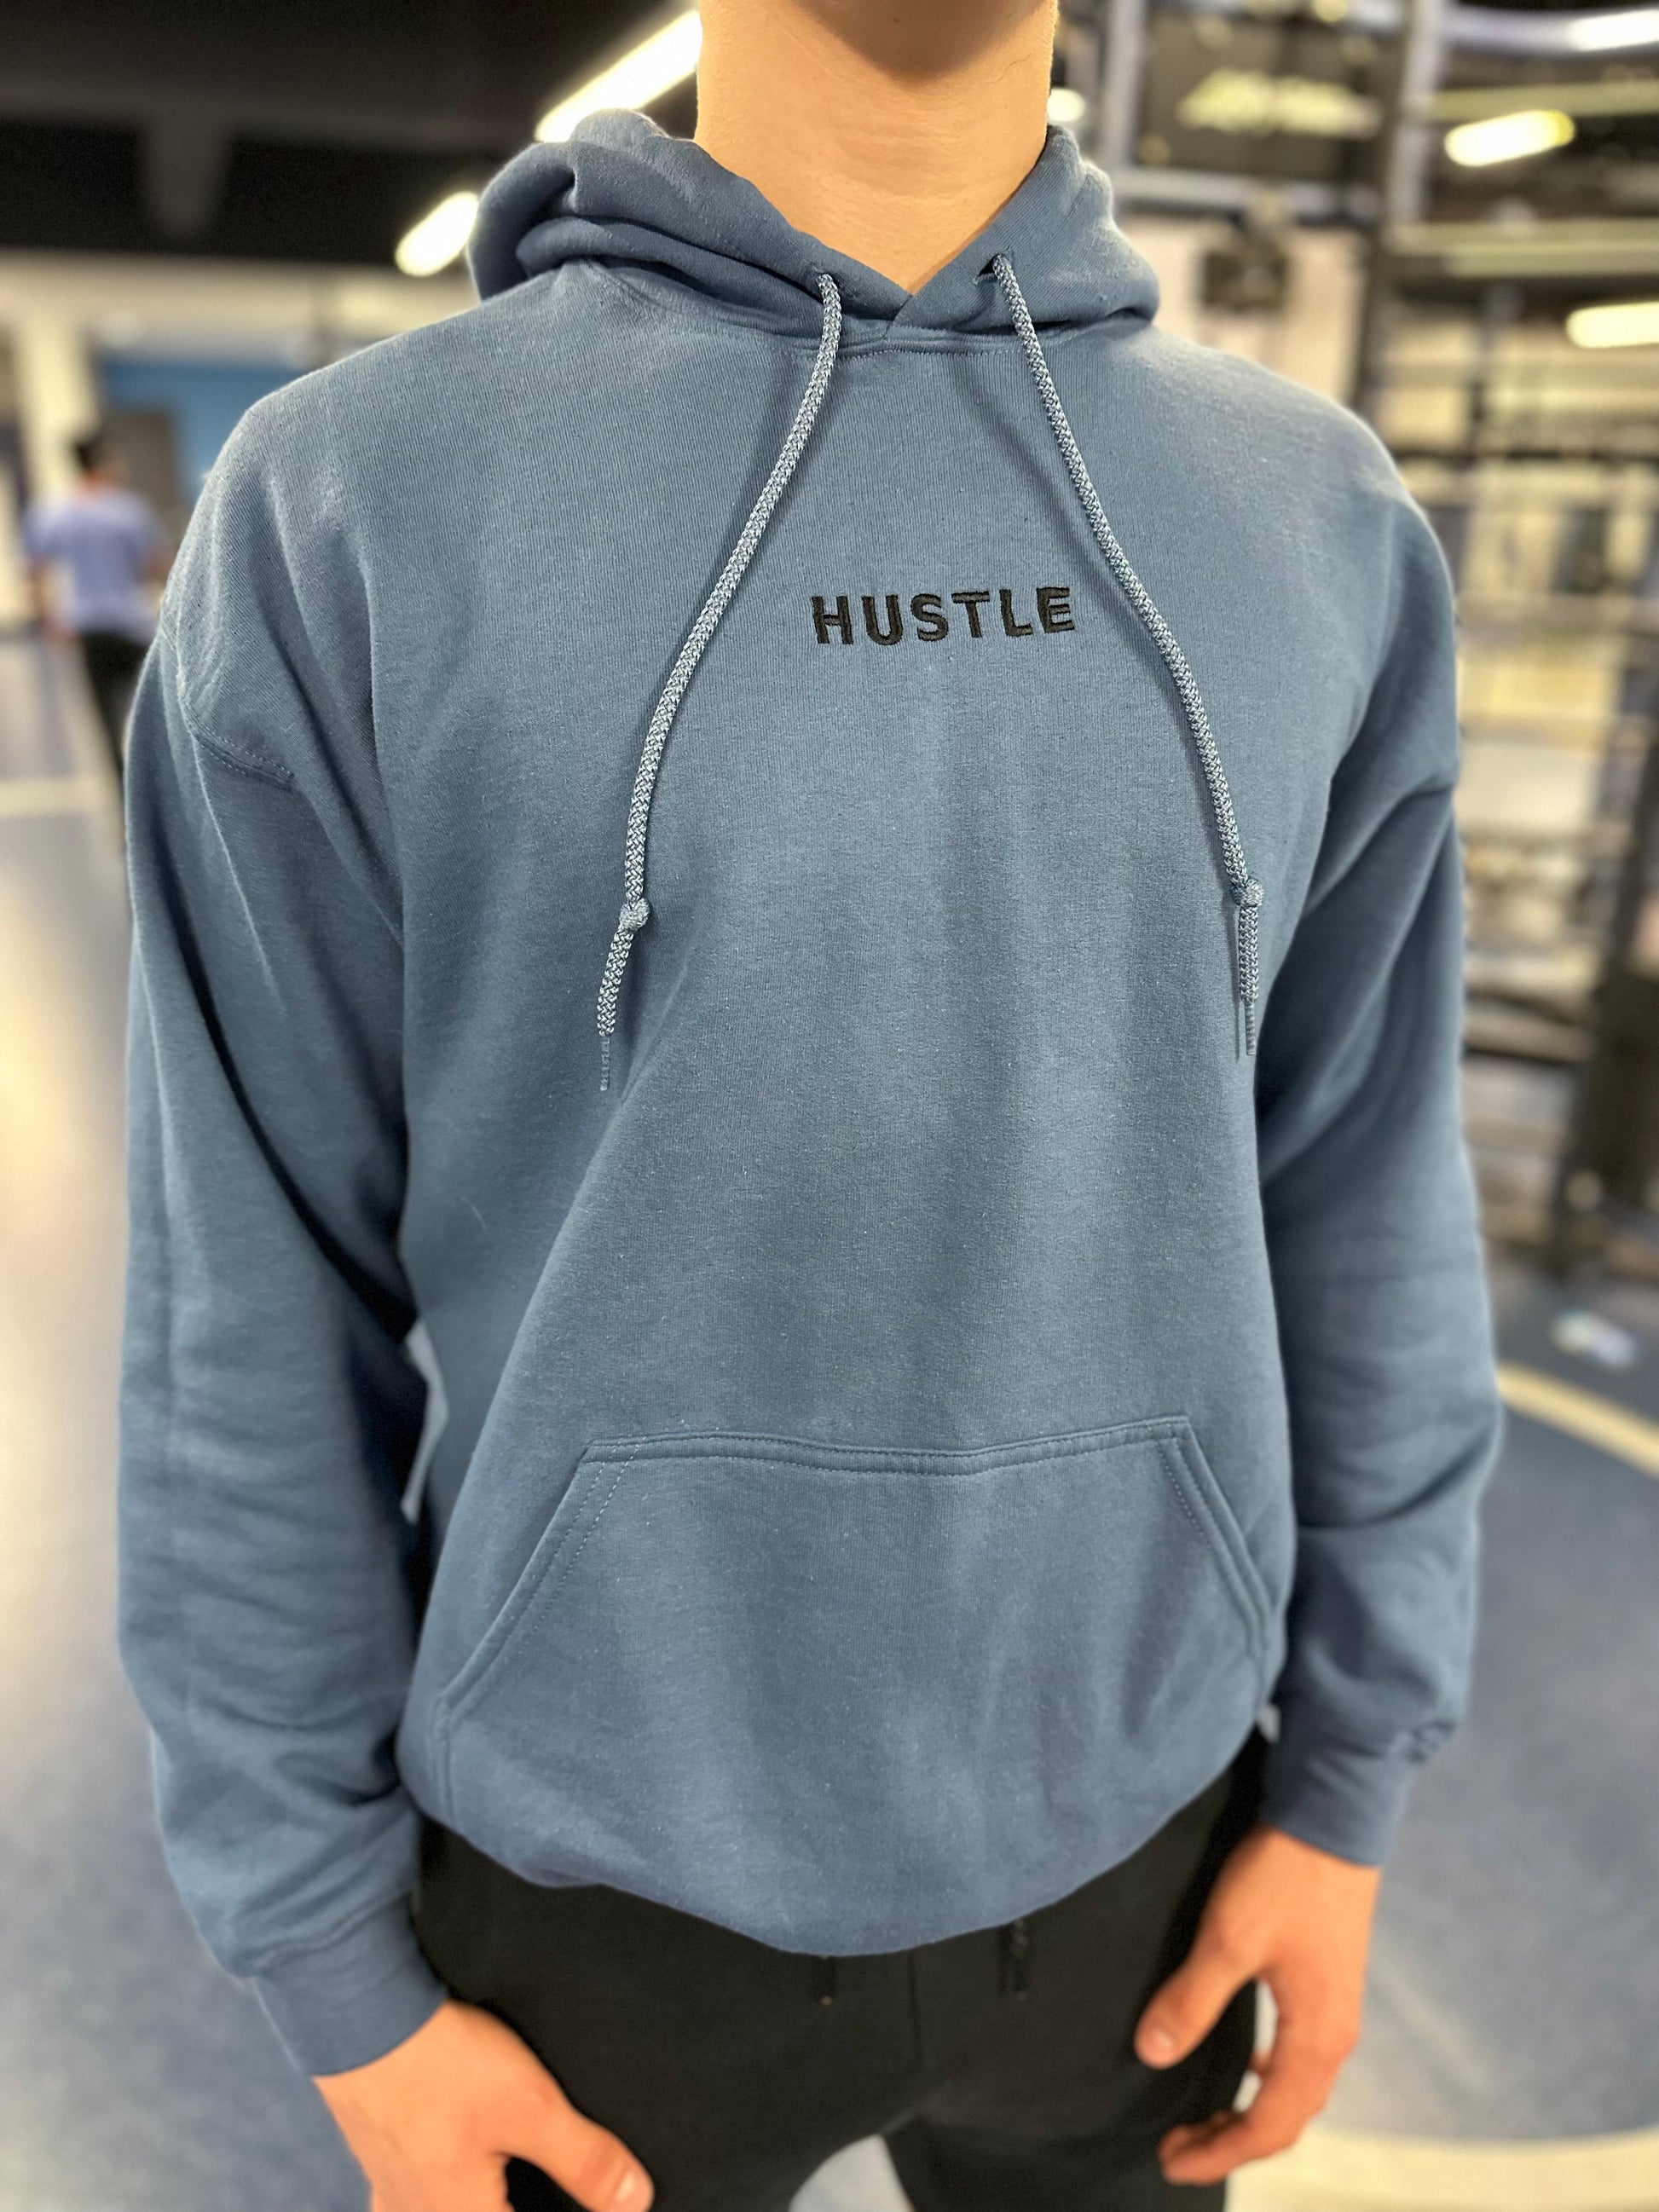 Men's 100% Hustle 0% Luck Hoodie